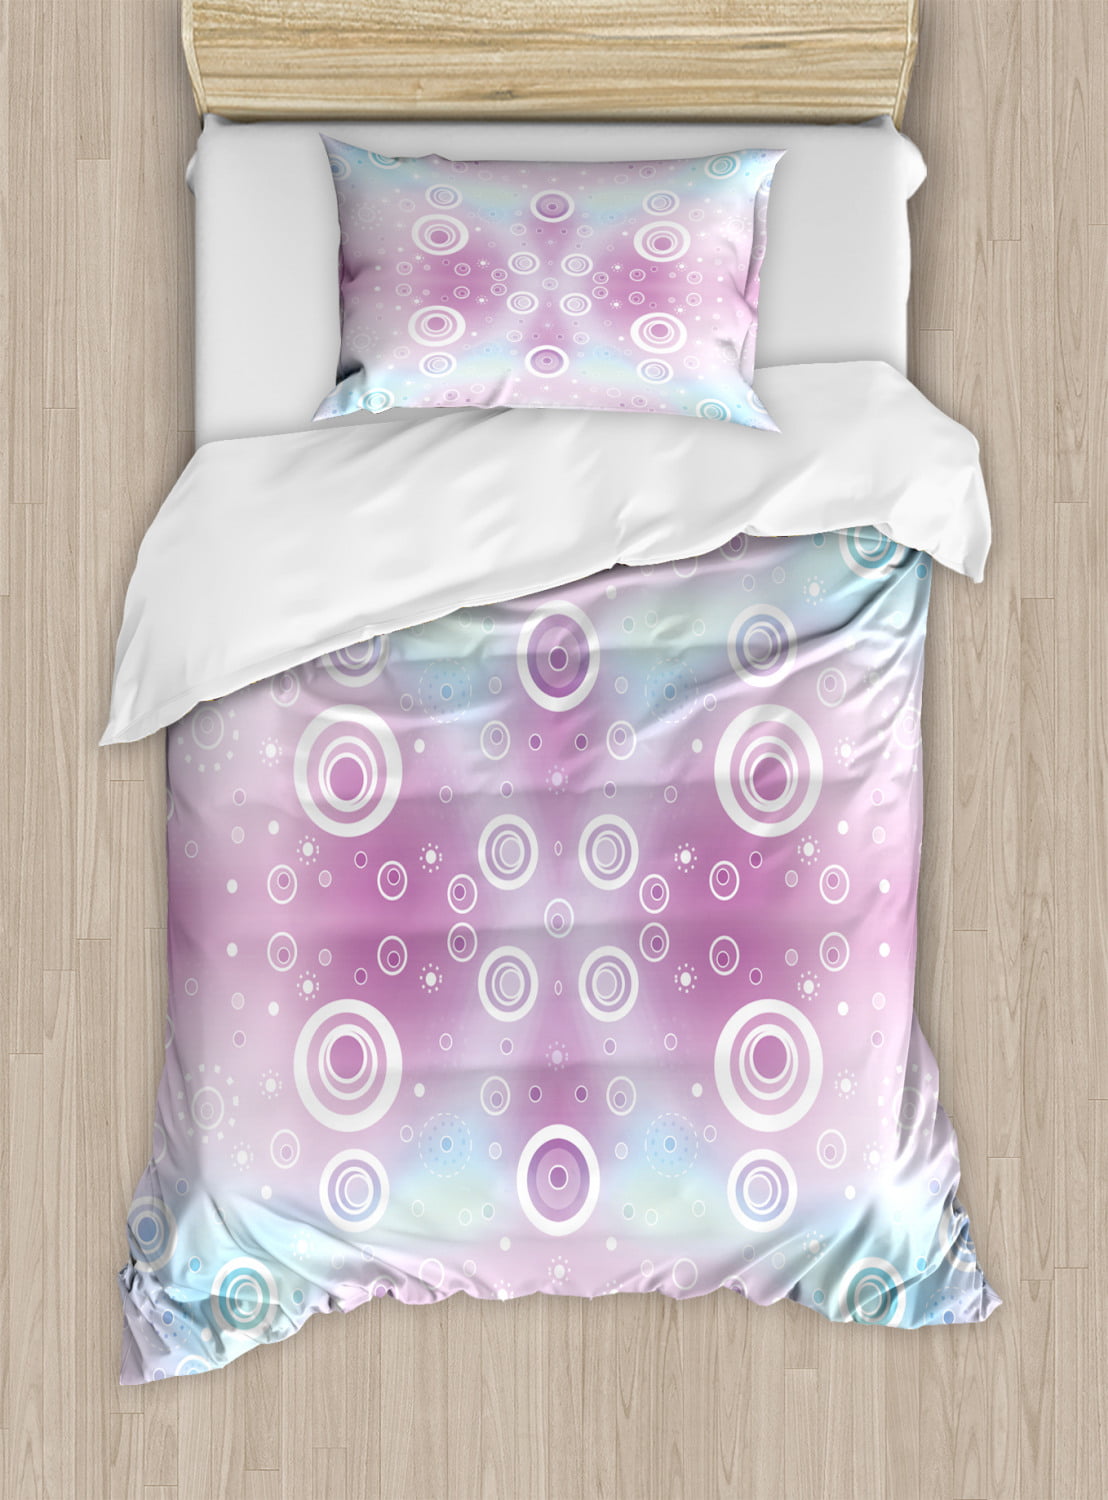 Details about   Pastel Quilted Bedspread & Pillow Shams Set Fantasy Random Circles Print 